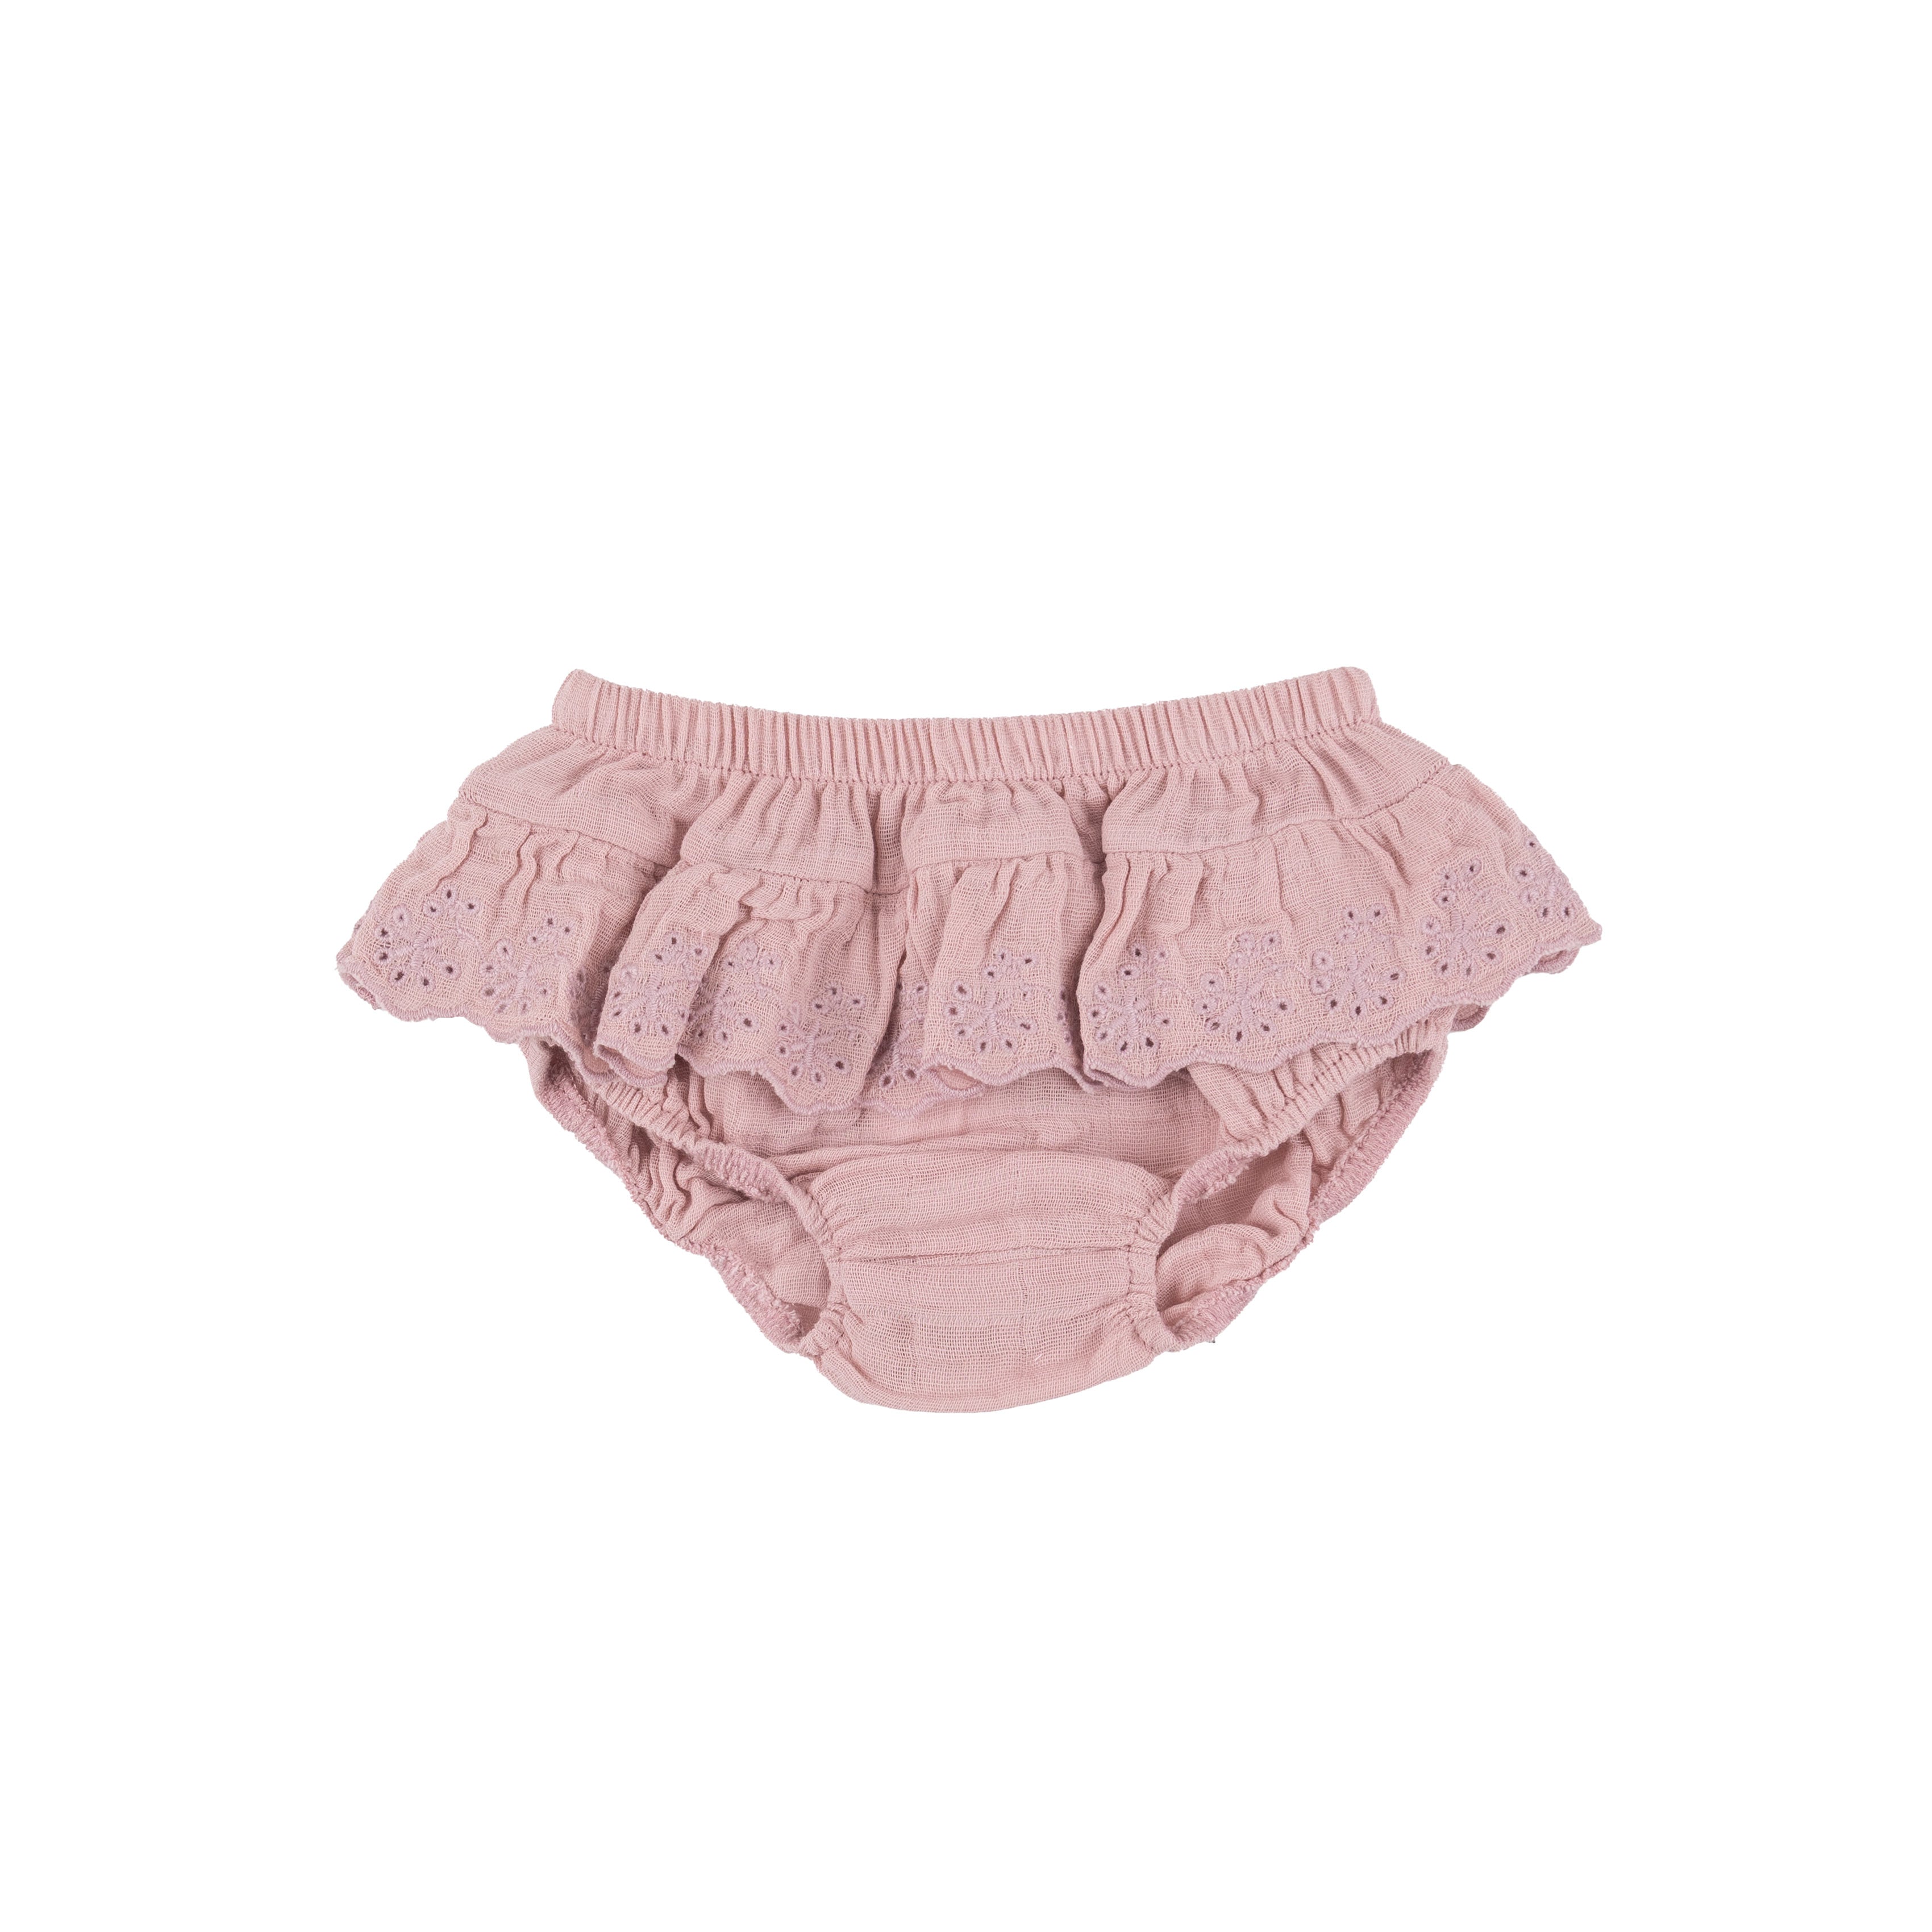 Bloomer Skirt - Dusty Pink Solid Muslin